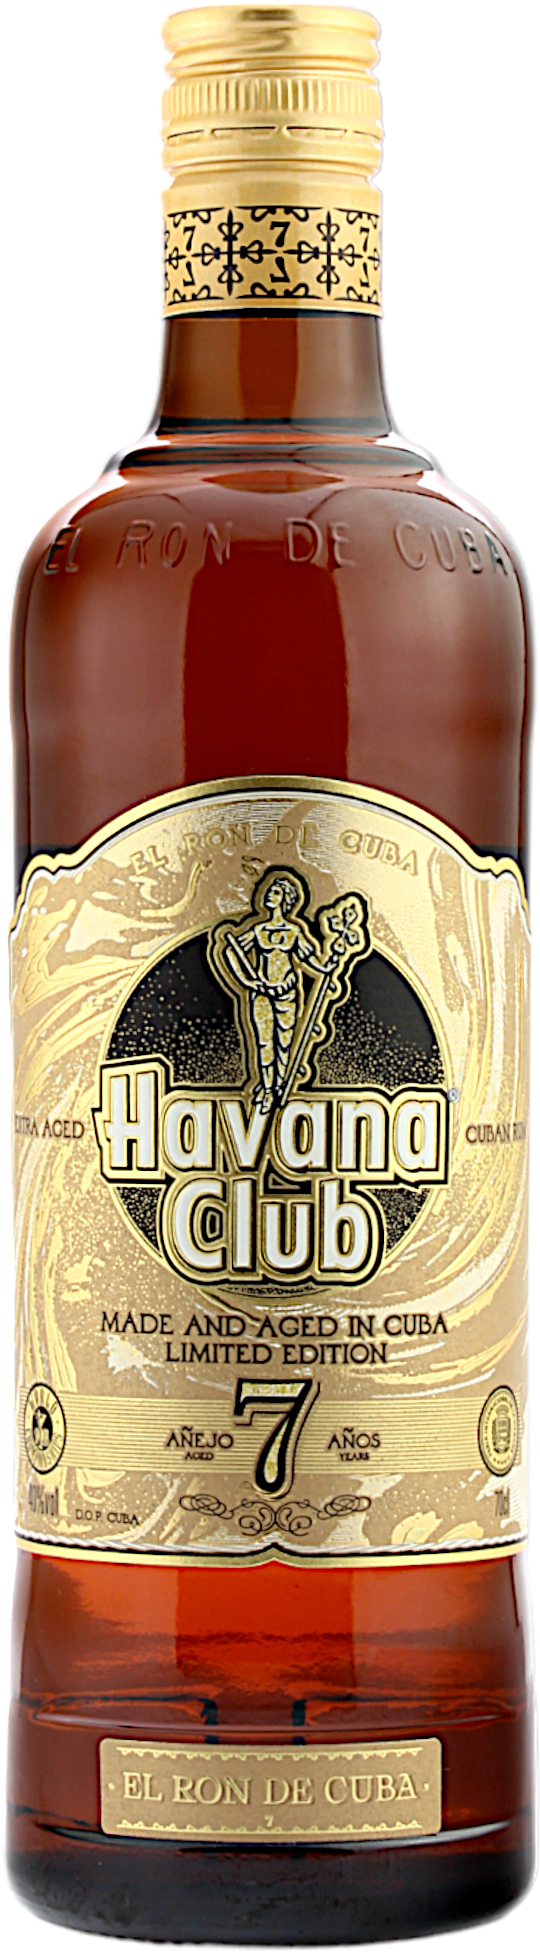 Havana Club Rum Anejo 7 Jahre Limited Edition 40.0% 0,7l